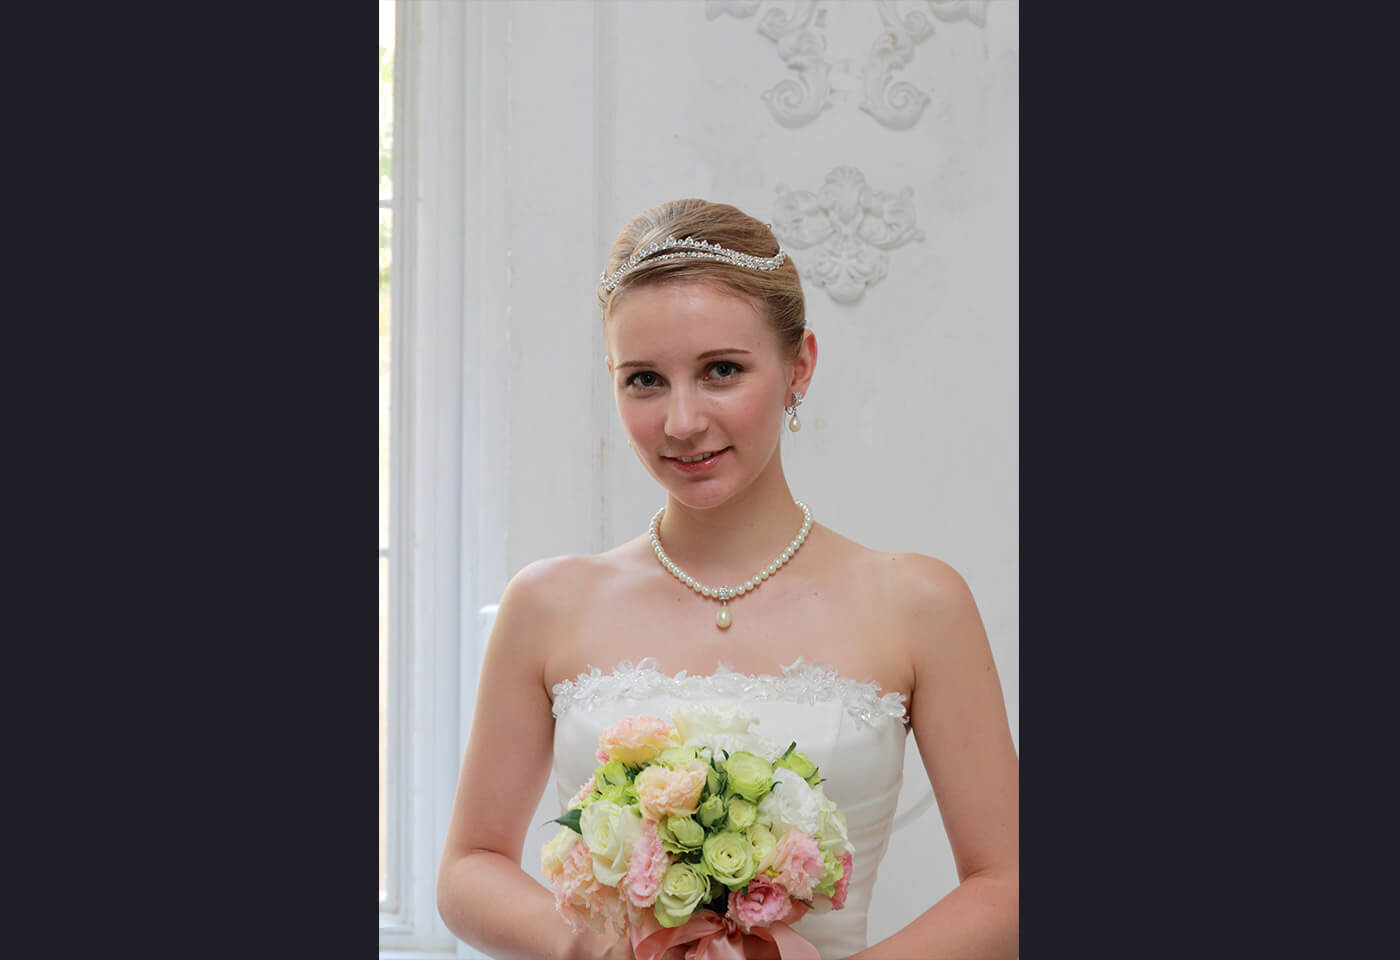 Bridal portrait using Canon Speedlite 430EX III-RT flash